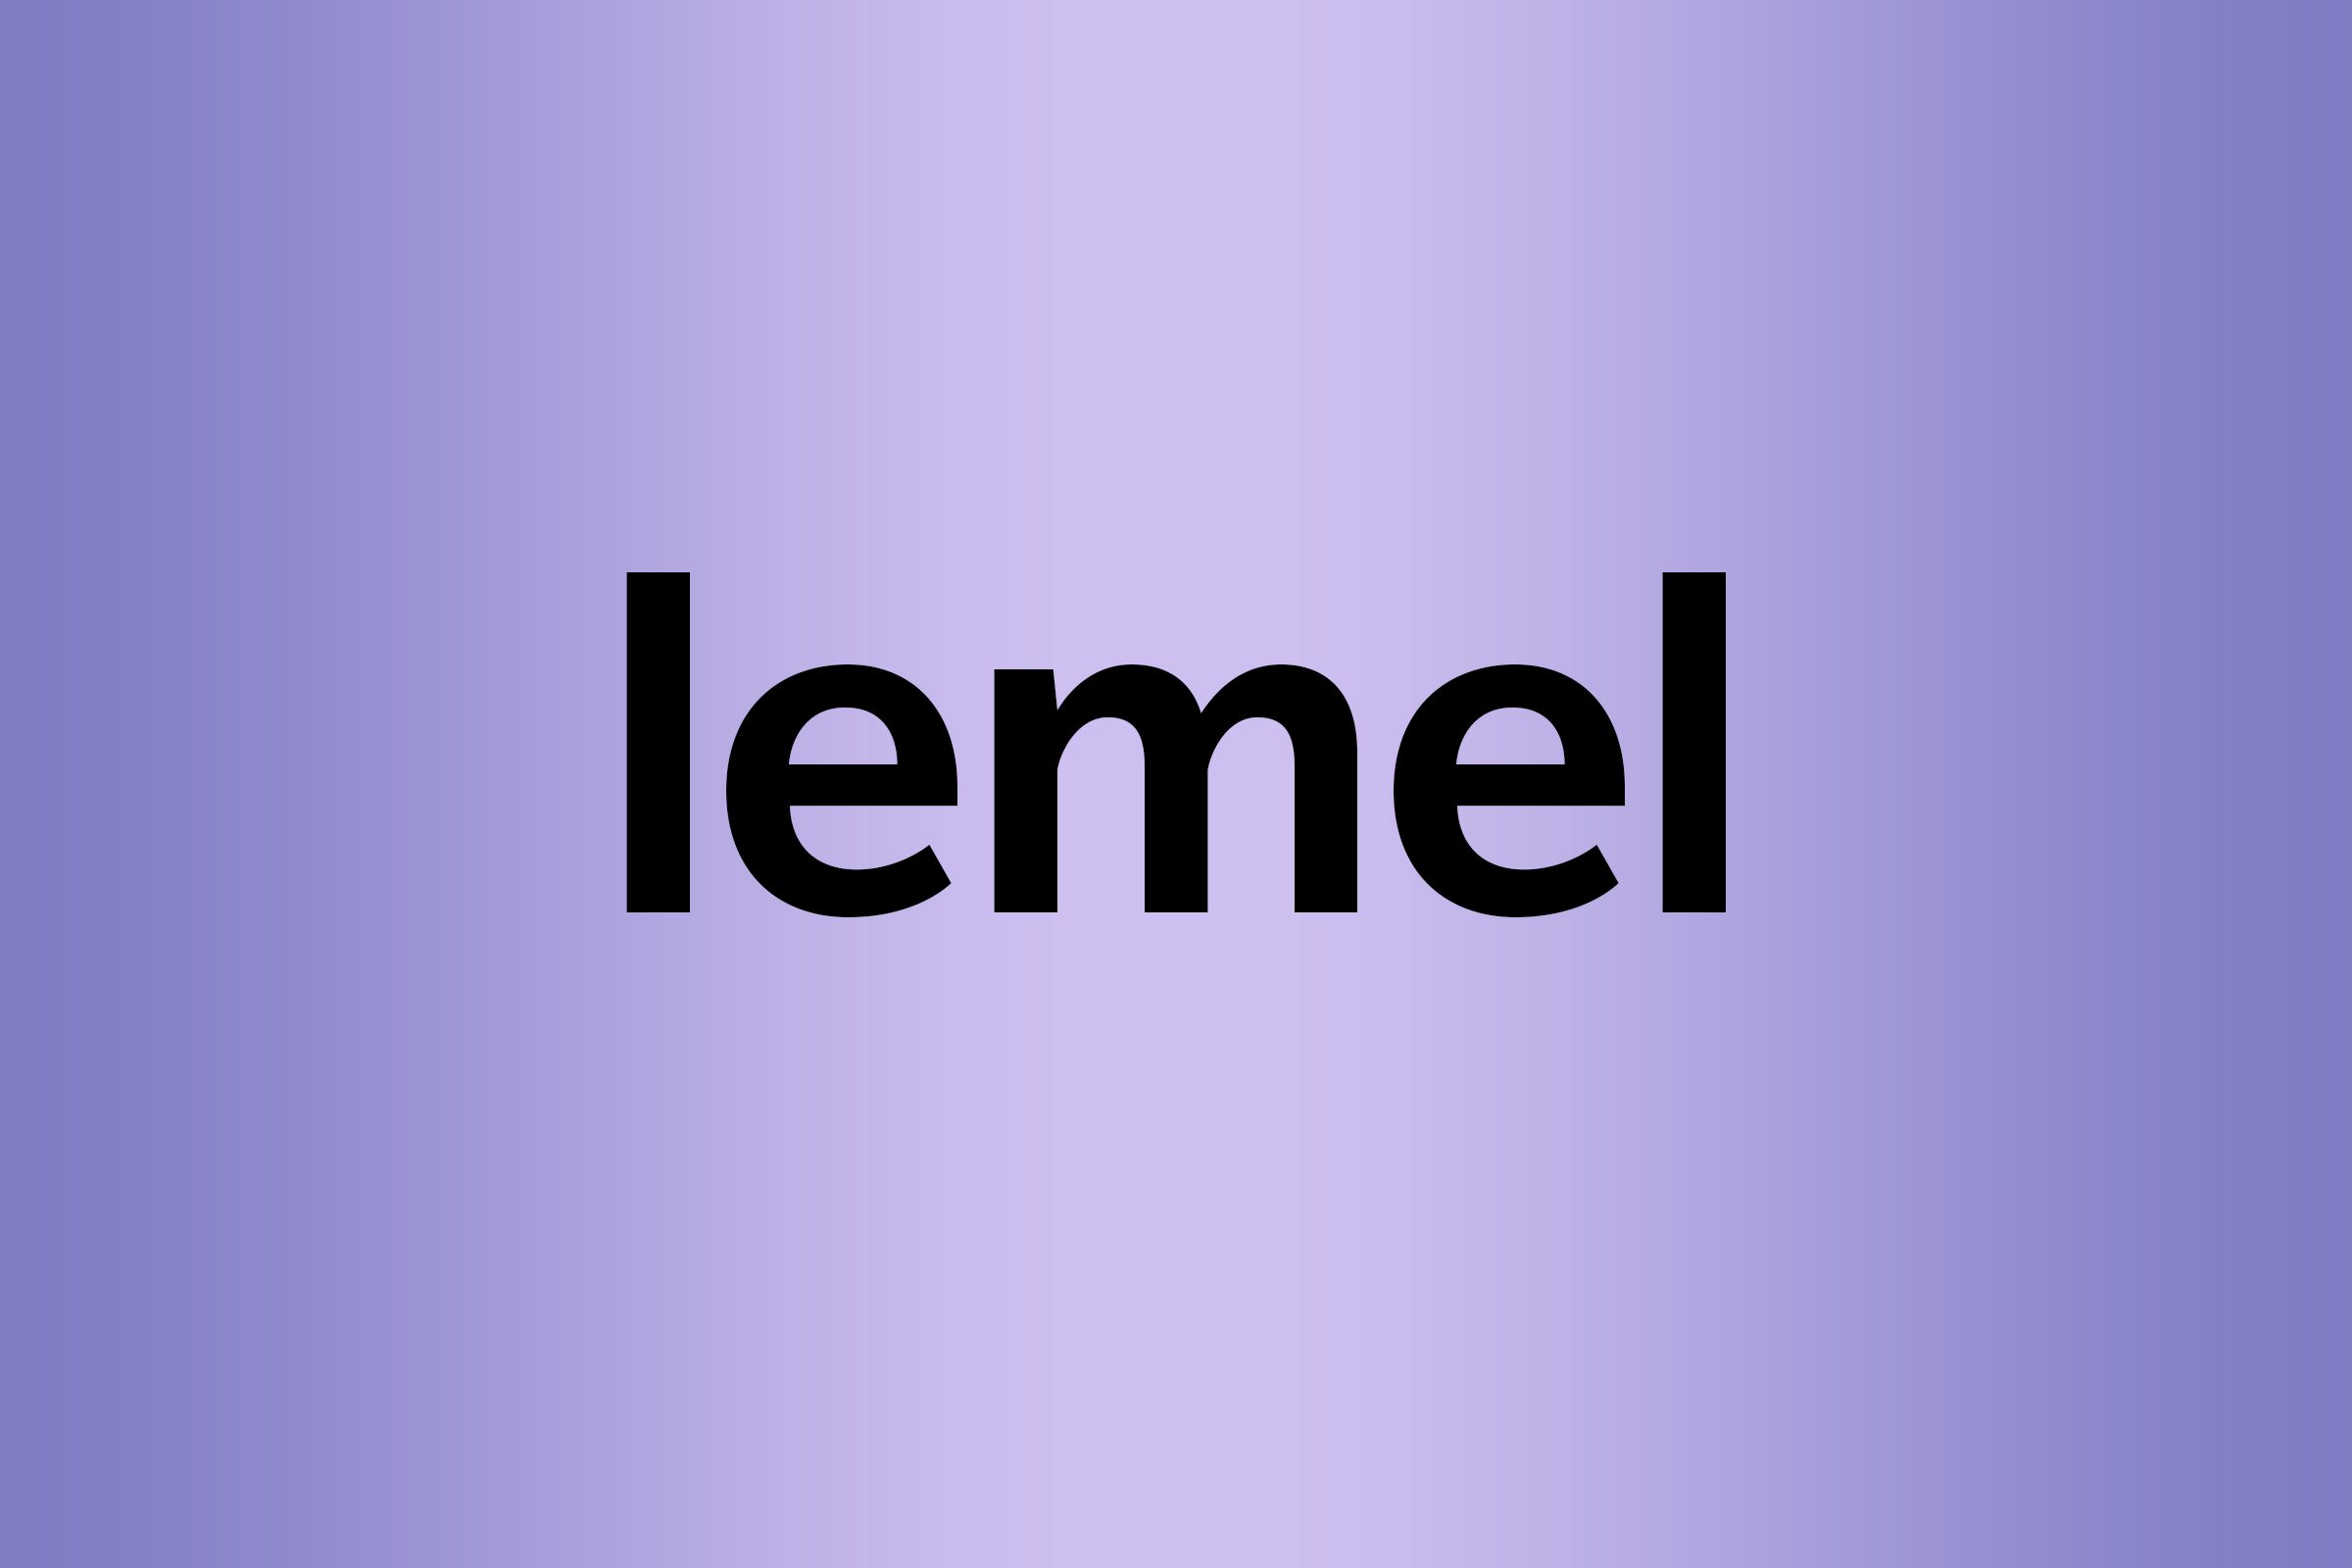 lemel palindrome words